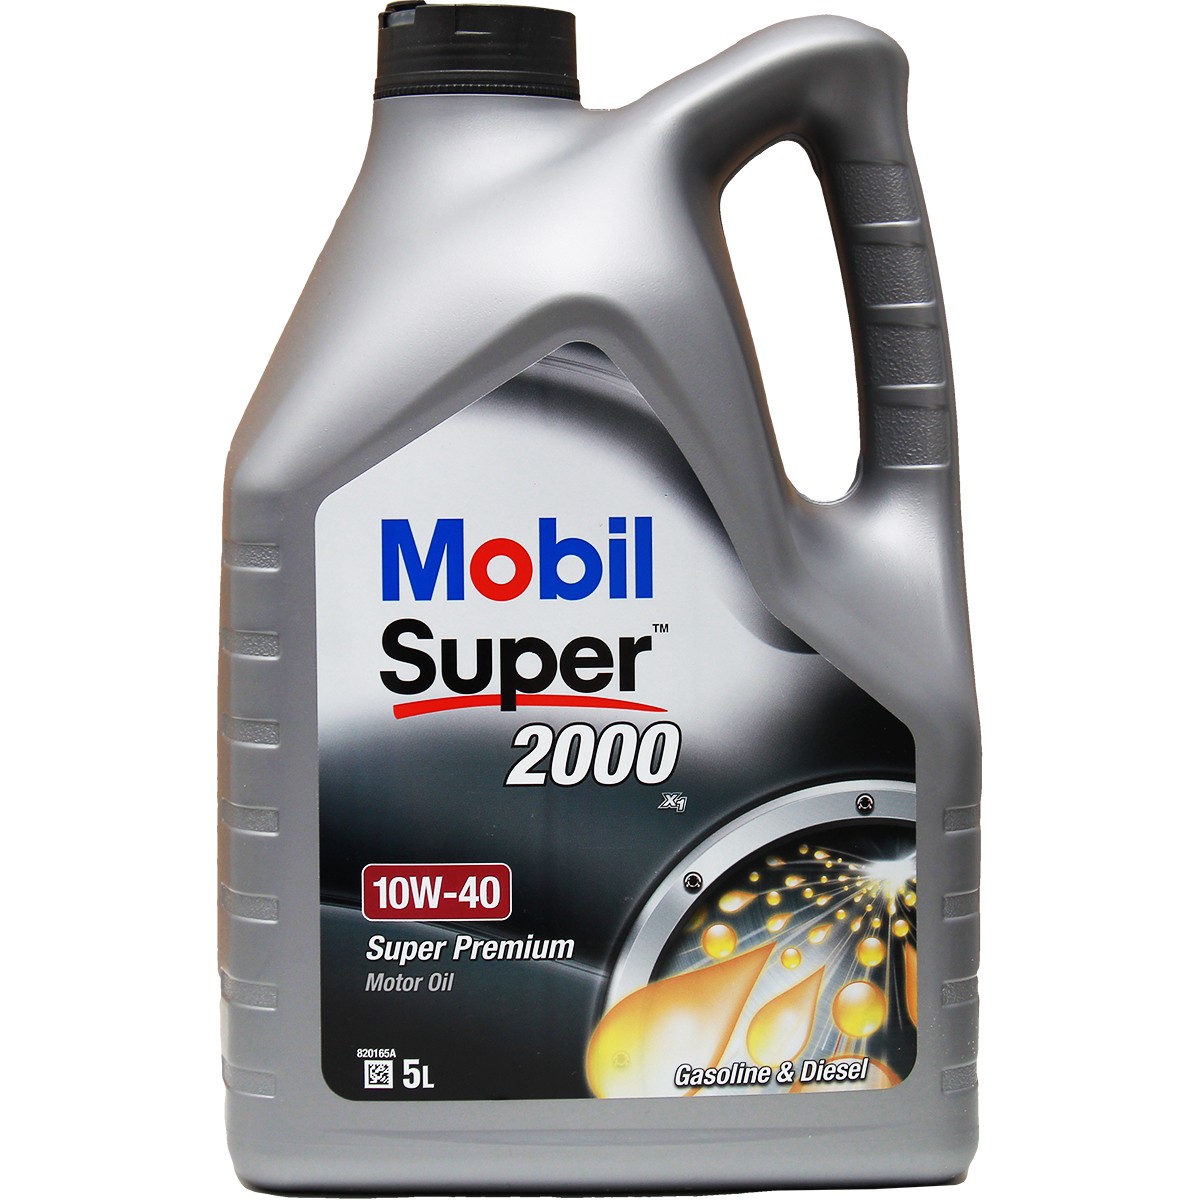 Car oil 150563 review